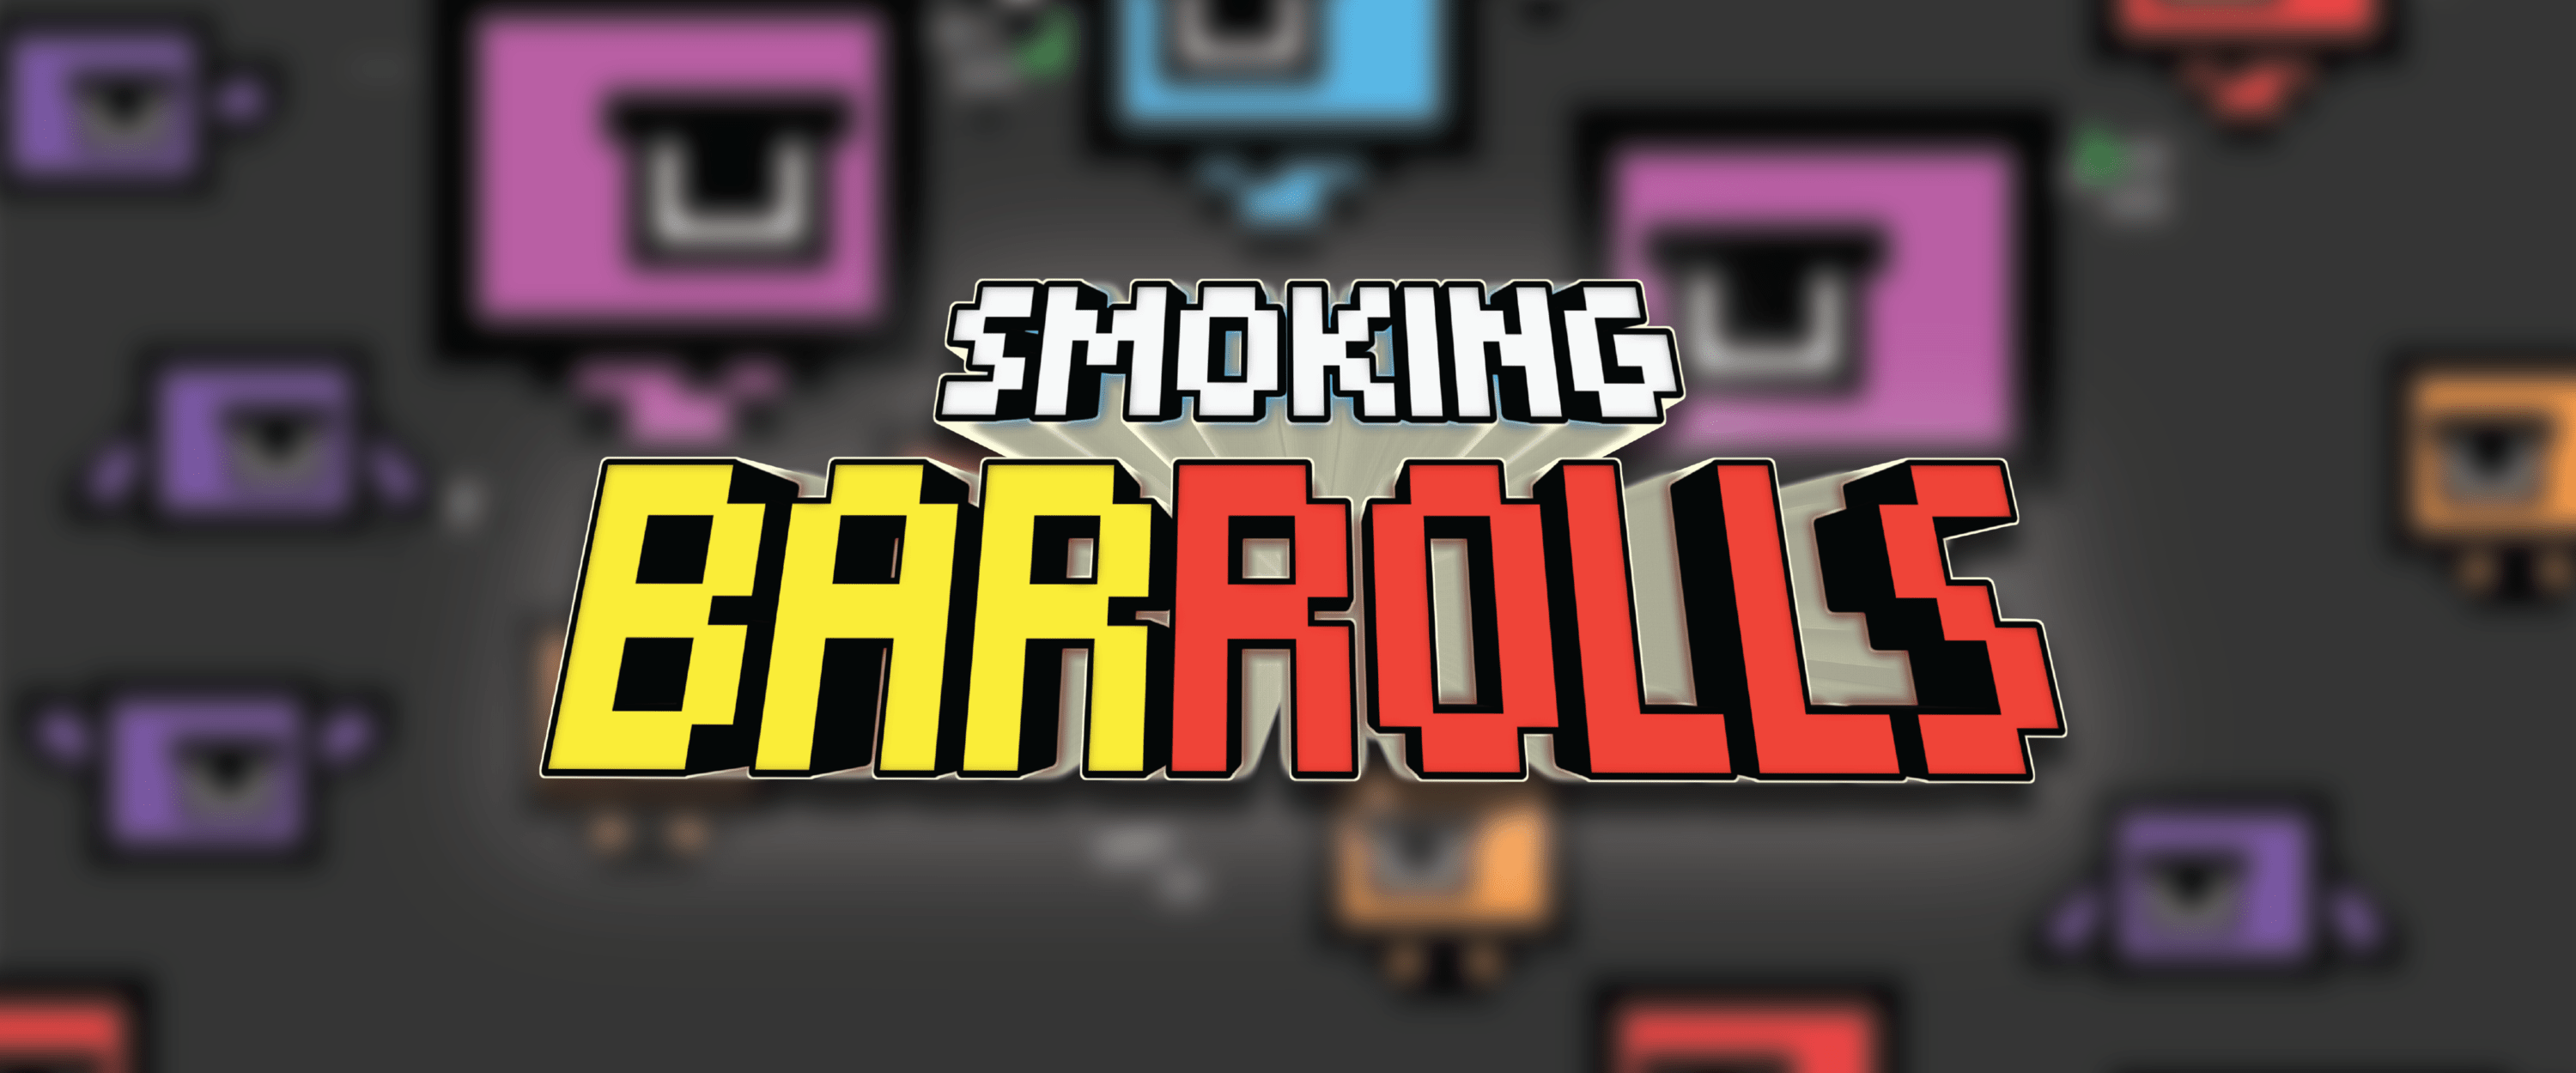 Smoking Barrolls